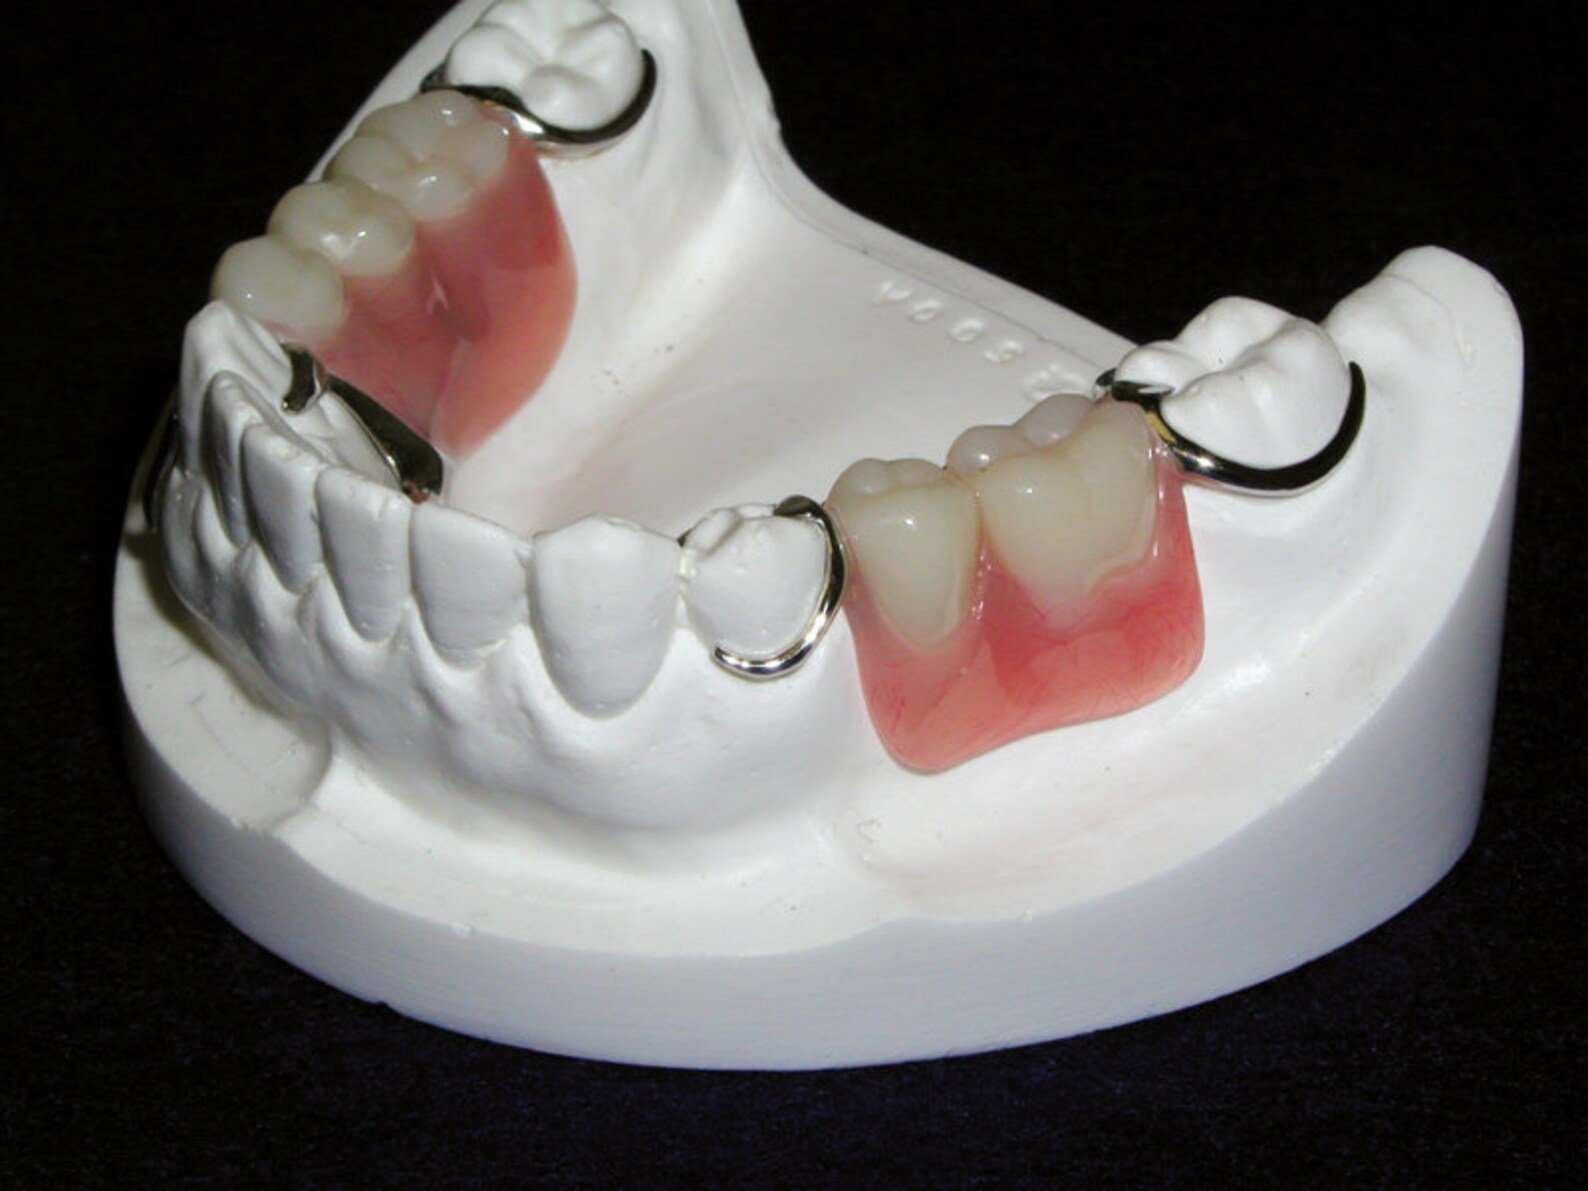 Types of Custom-Made Partial Dentures